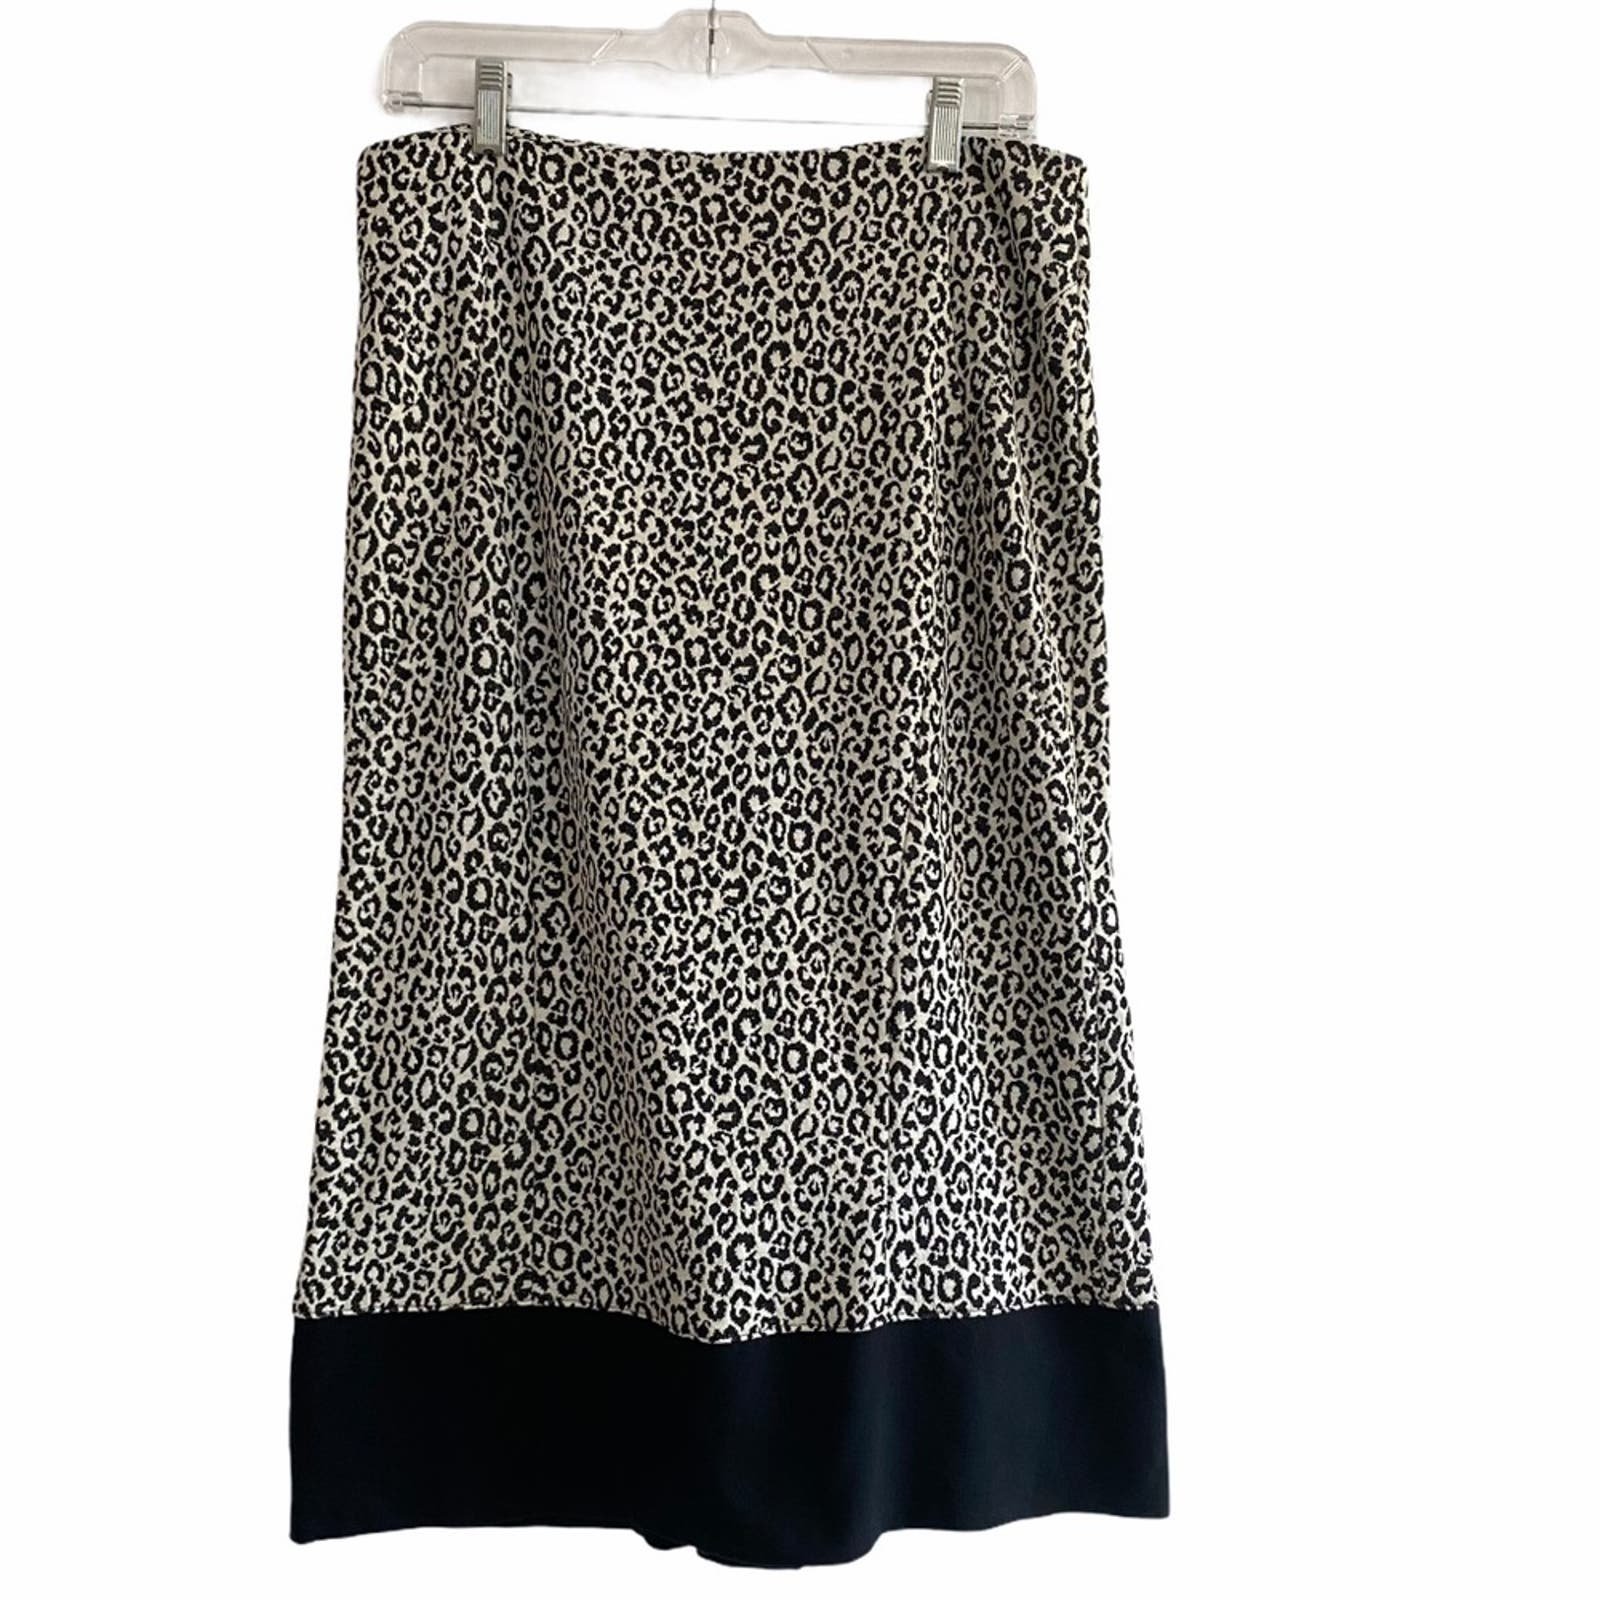 Fashion Black leopard print skirt Harvé Benard size 8 I